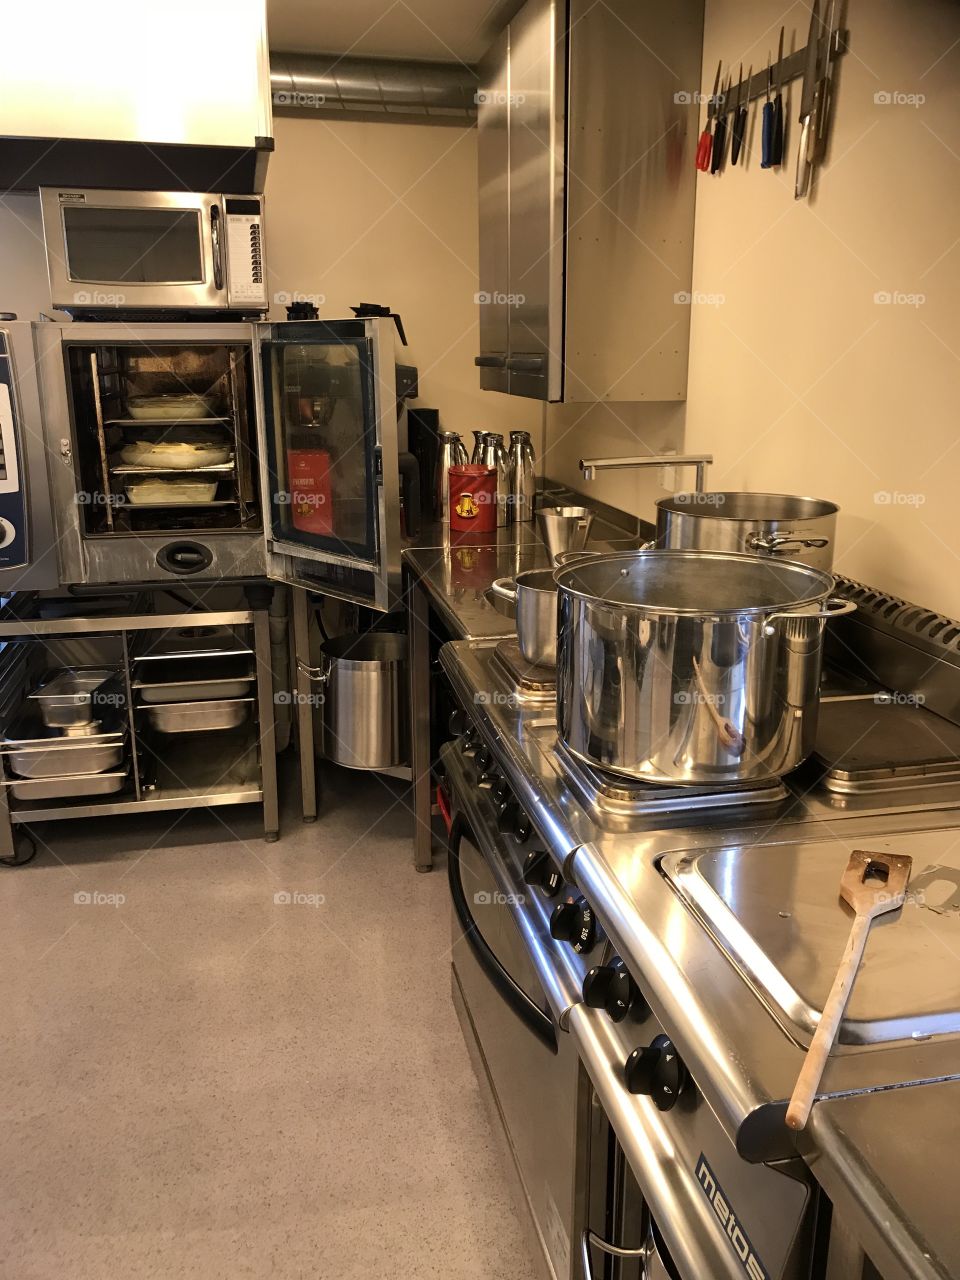 Fancy restaurant kitchen. Some baking ovens, boiling pans. Fancy shelves, and more kitchen stuff.